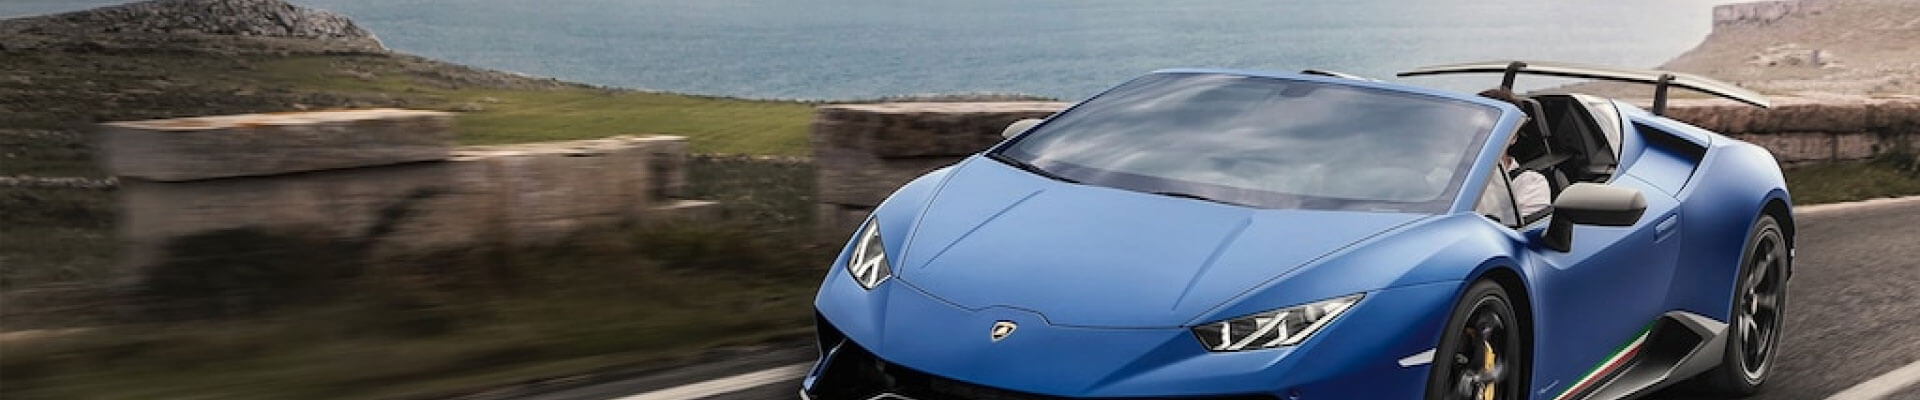 Lamborghini Модели